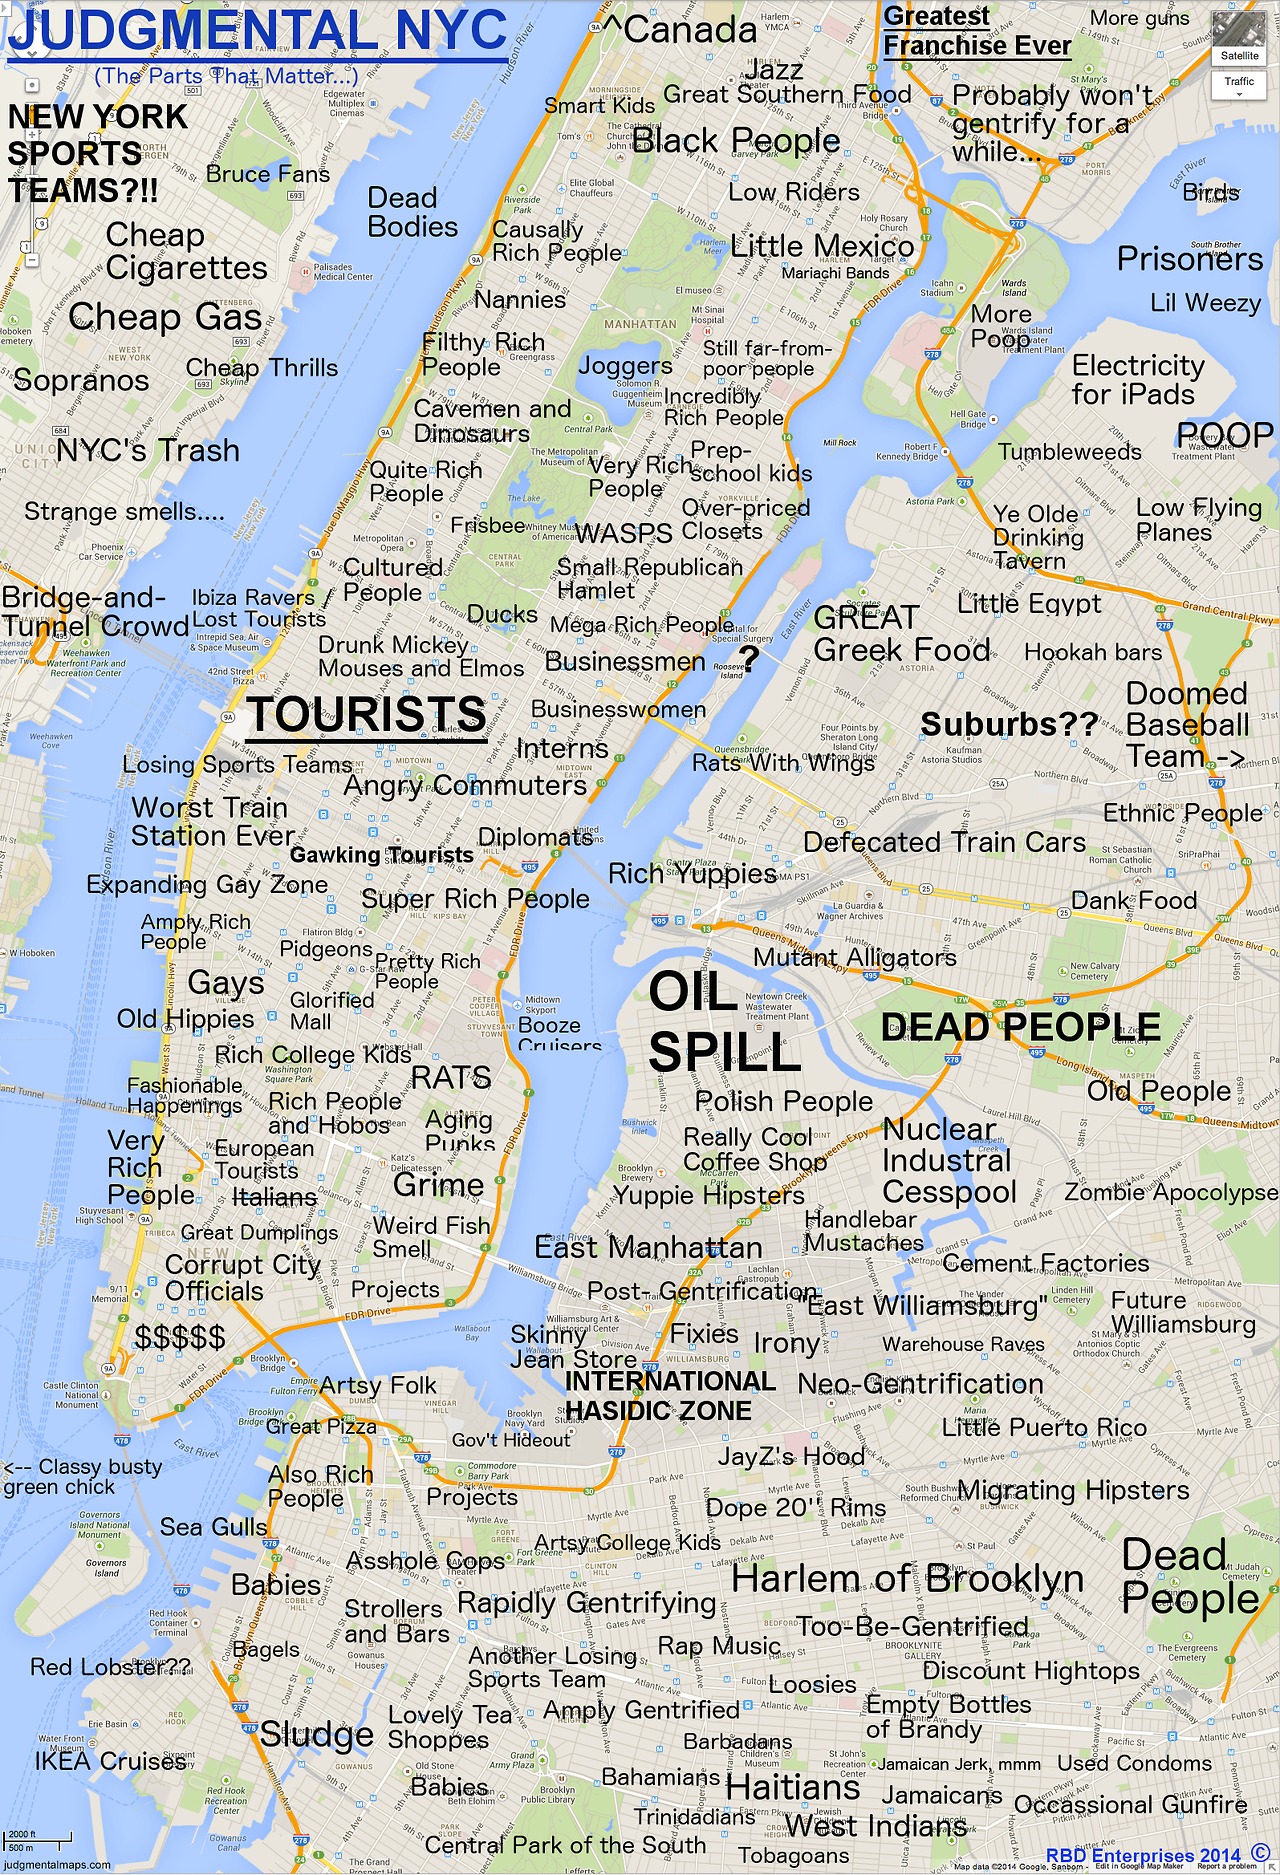 Image courtesy Judgemental Map of NYC